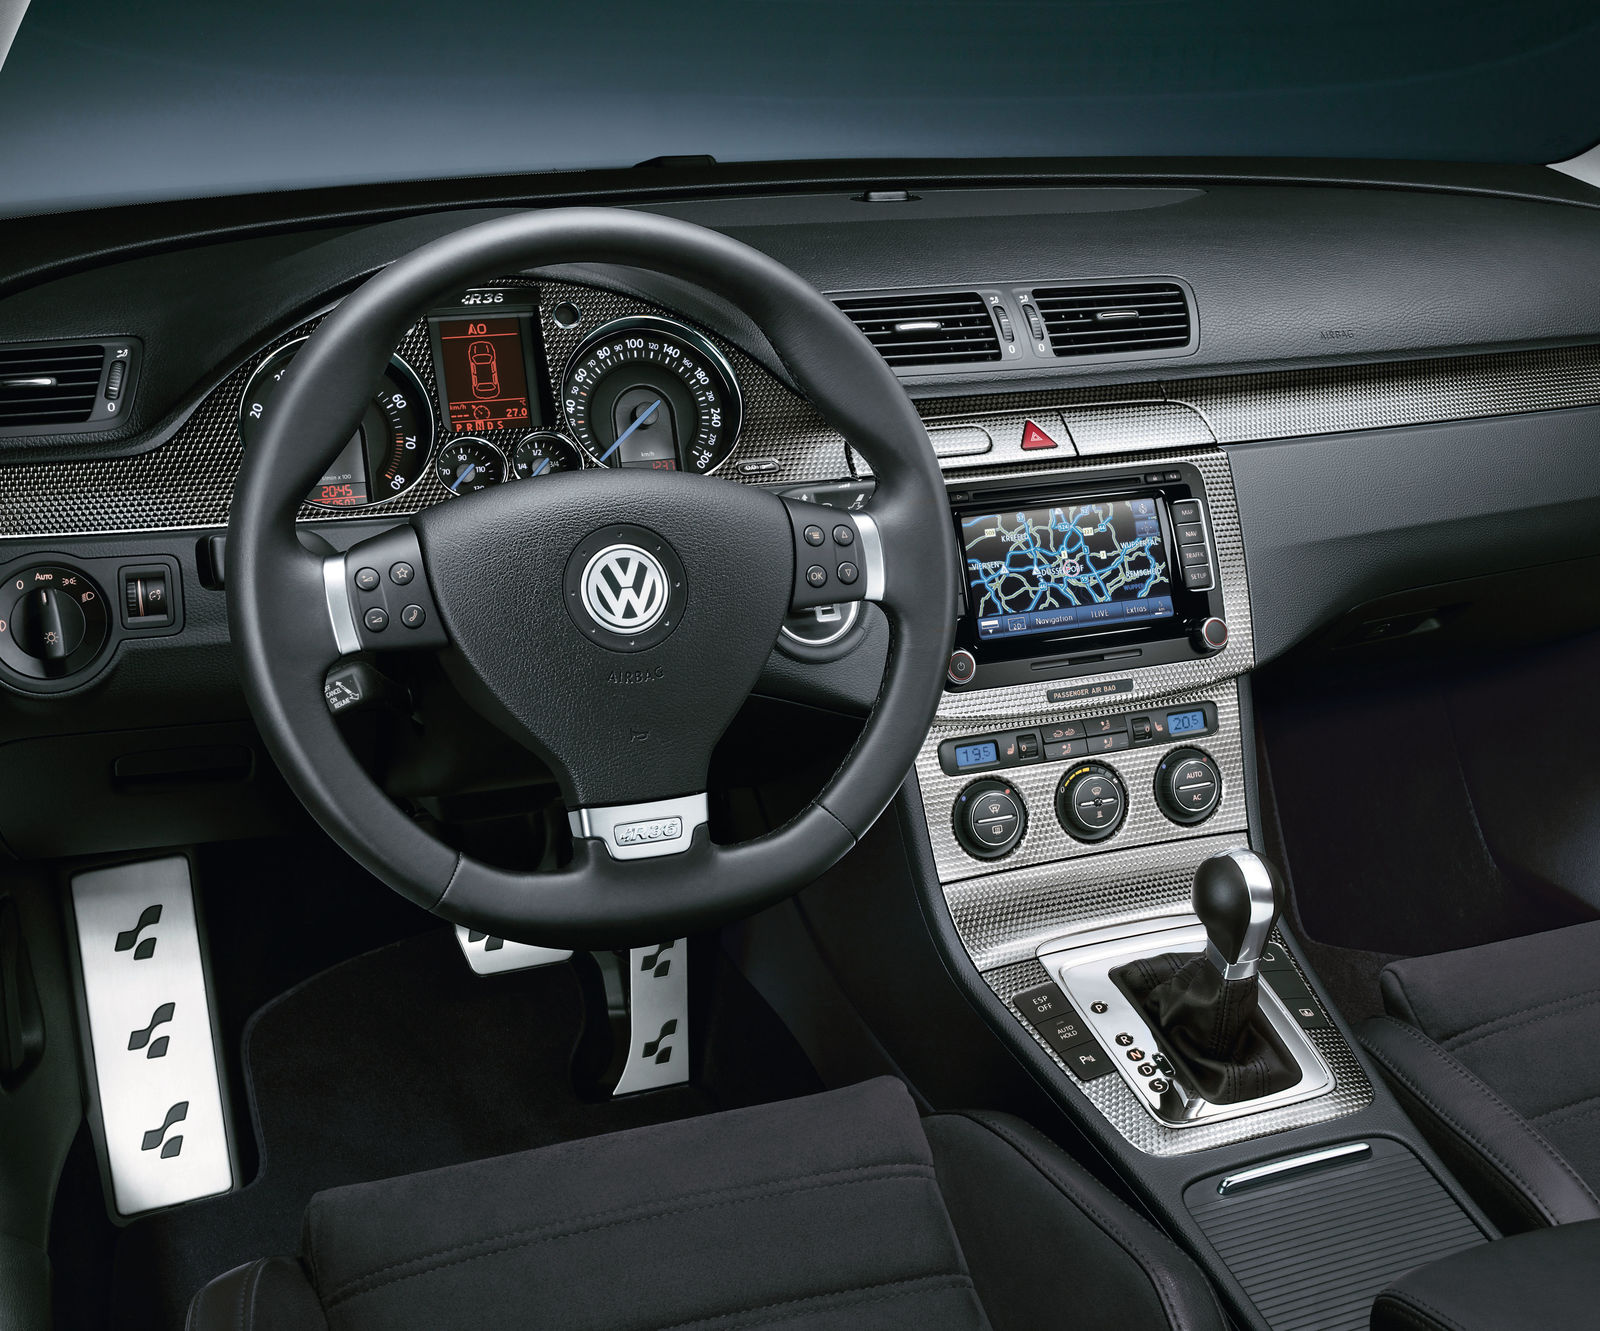 Пассат б6 г. Фольксваген Пассат b6 салон. B6 Фольксваген Пассат 2007. VW Passat b6 Interior. Volkswagen Passat b6 салон.